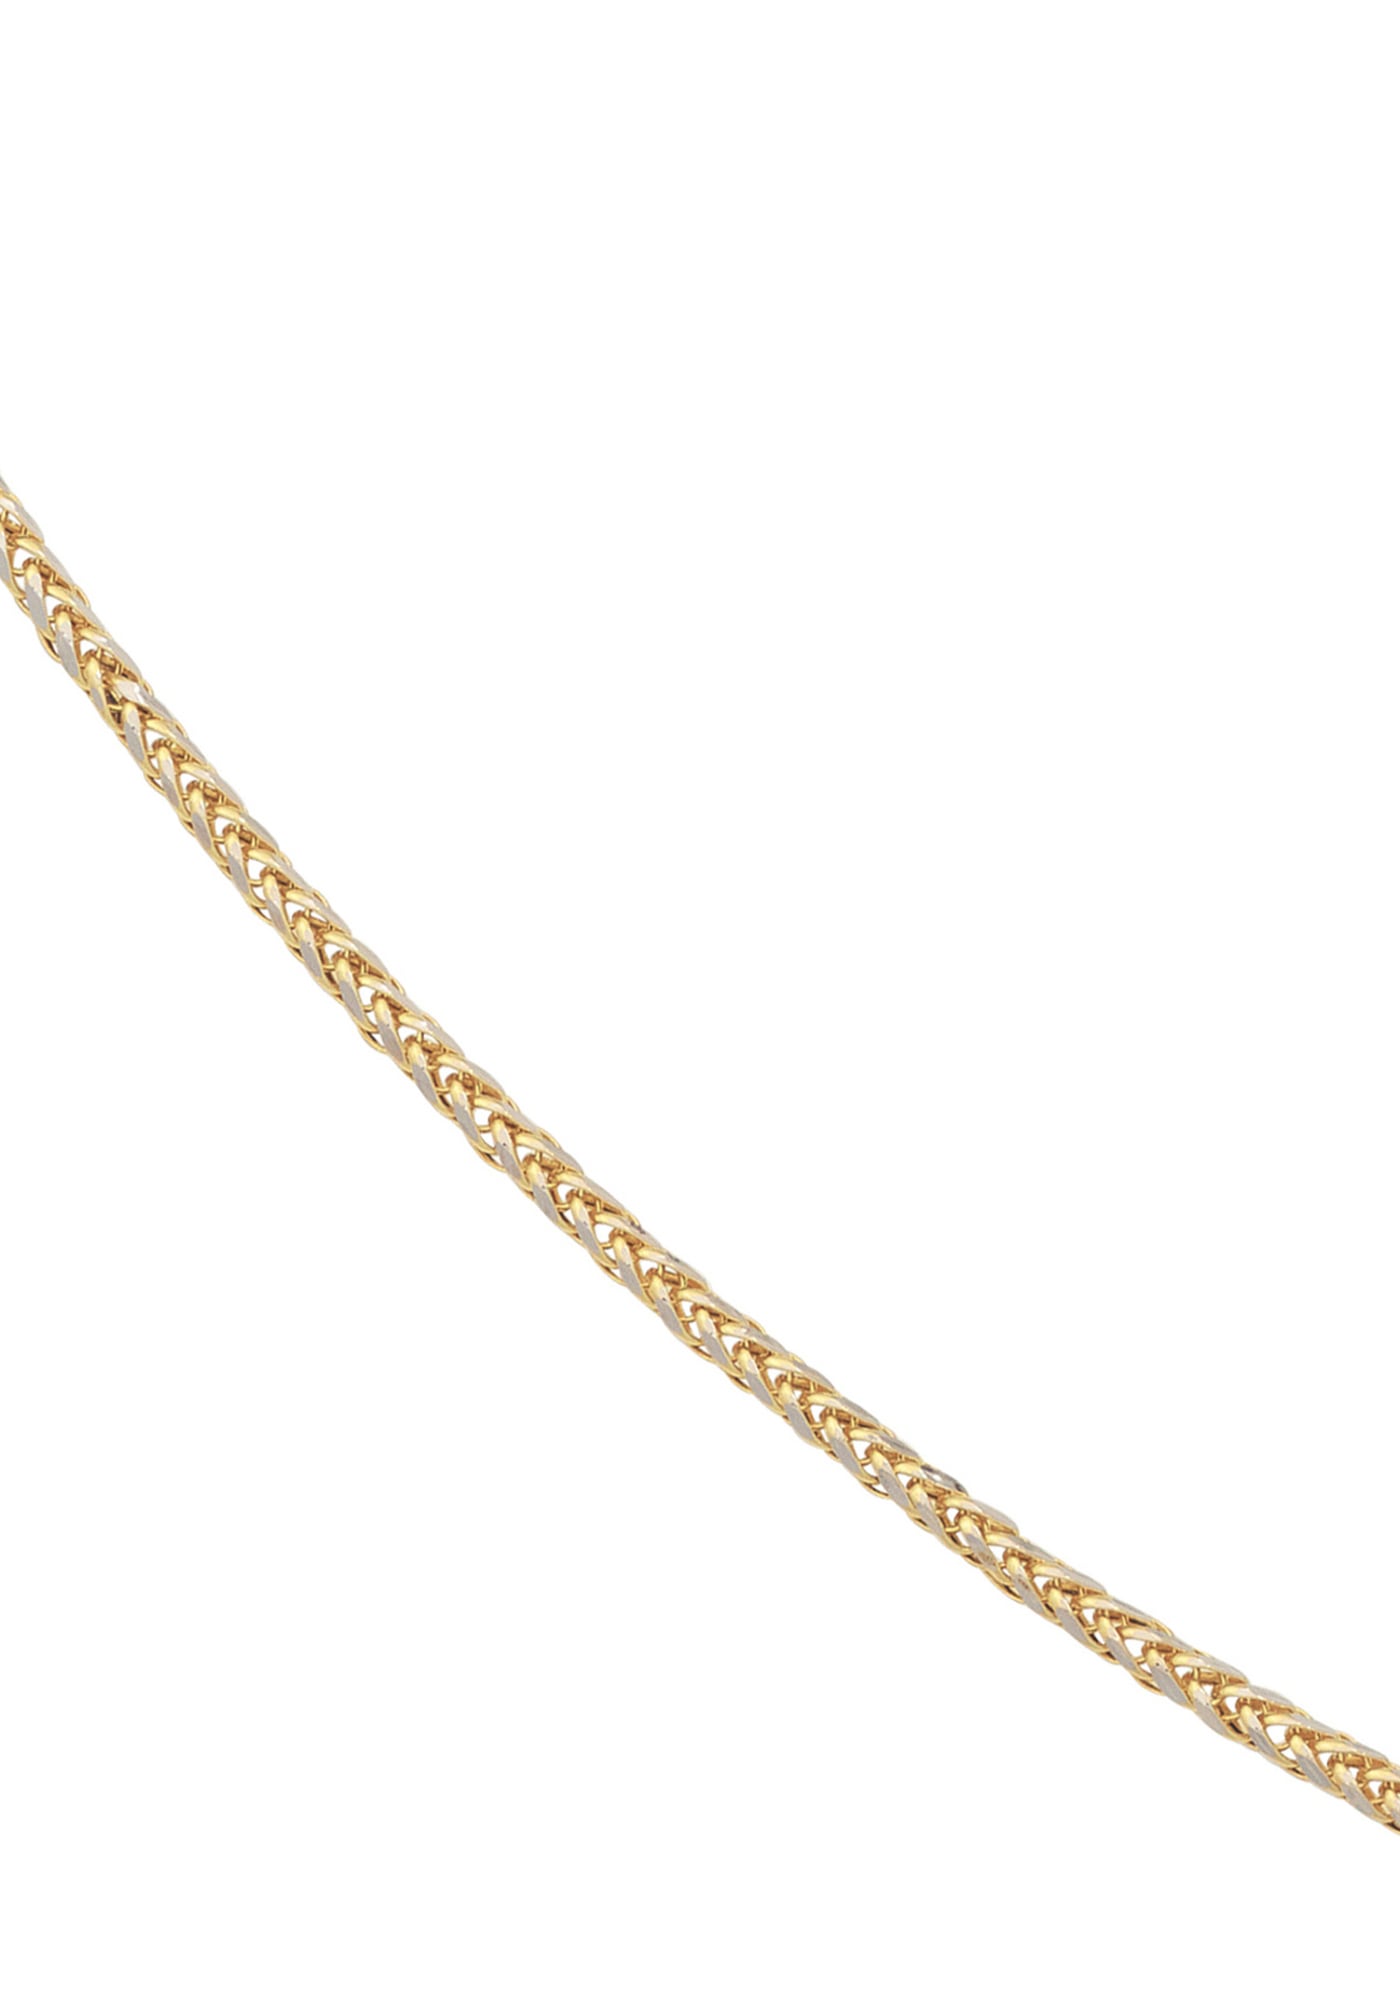 JOBO Goldkette, Zopfkette 585 Gold | kaufen 1,9 cm 45 bicolor mm BAUR online